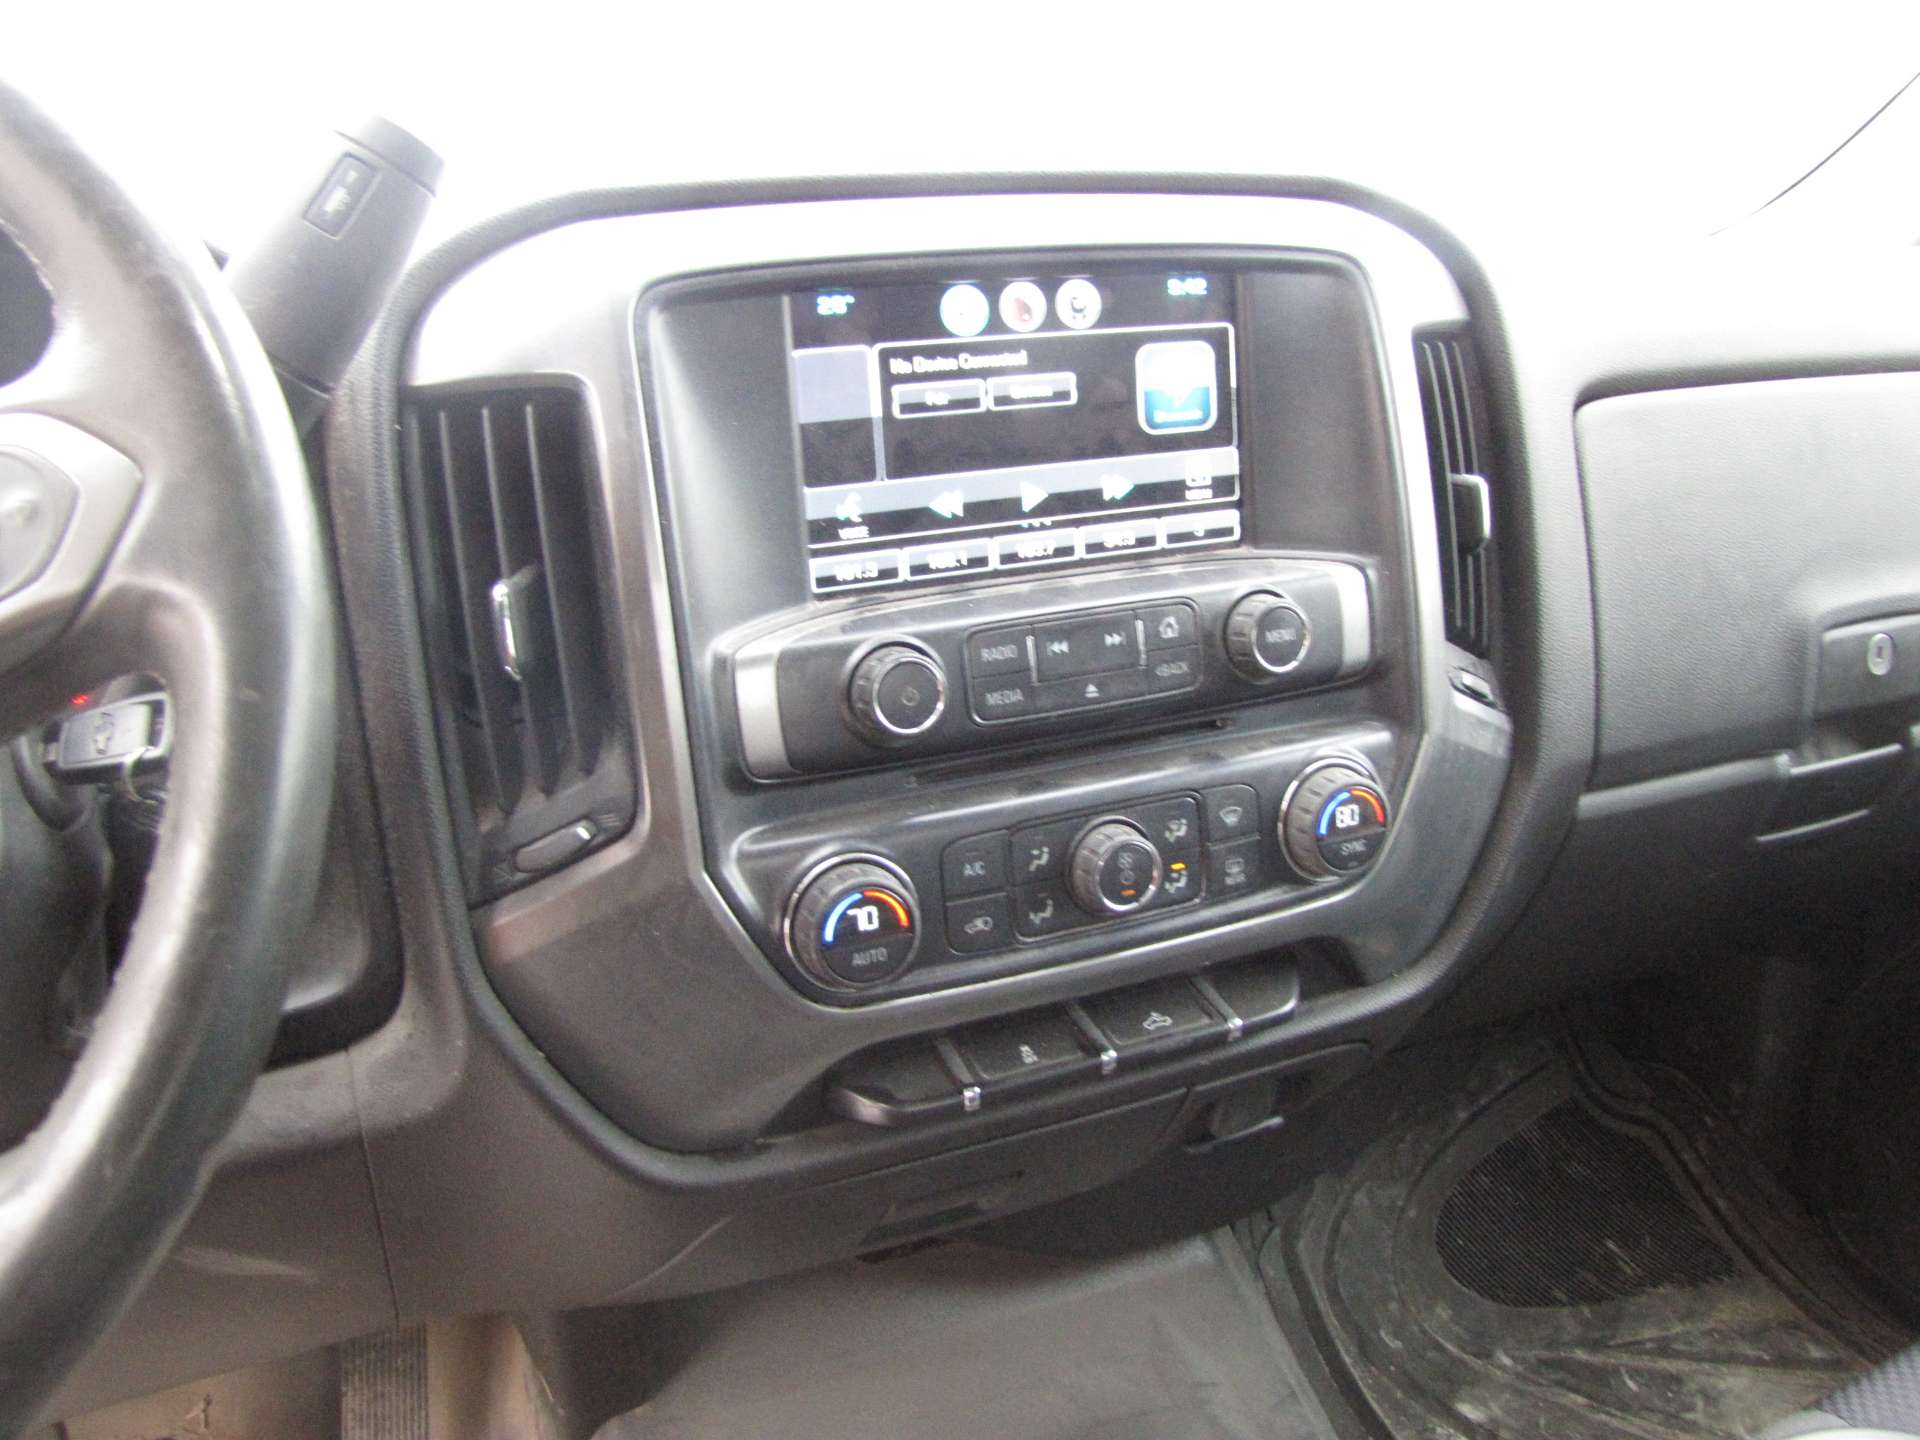 2014 Chevy Silverado 1500 pickup truck - Image 48 of 55